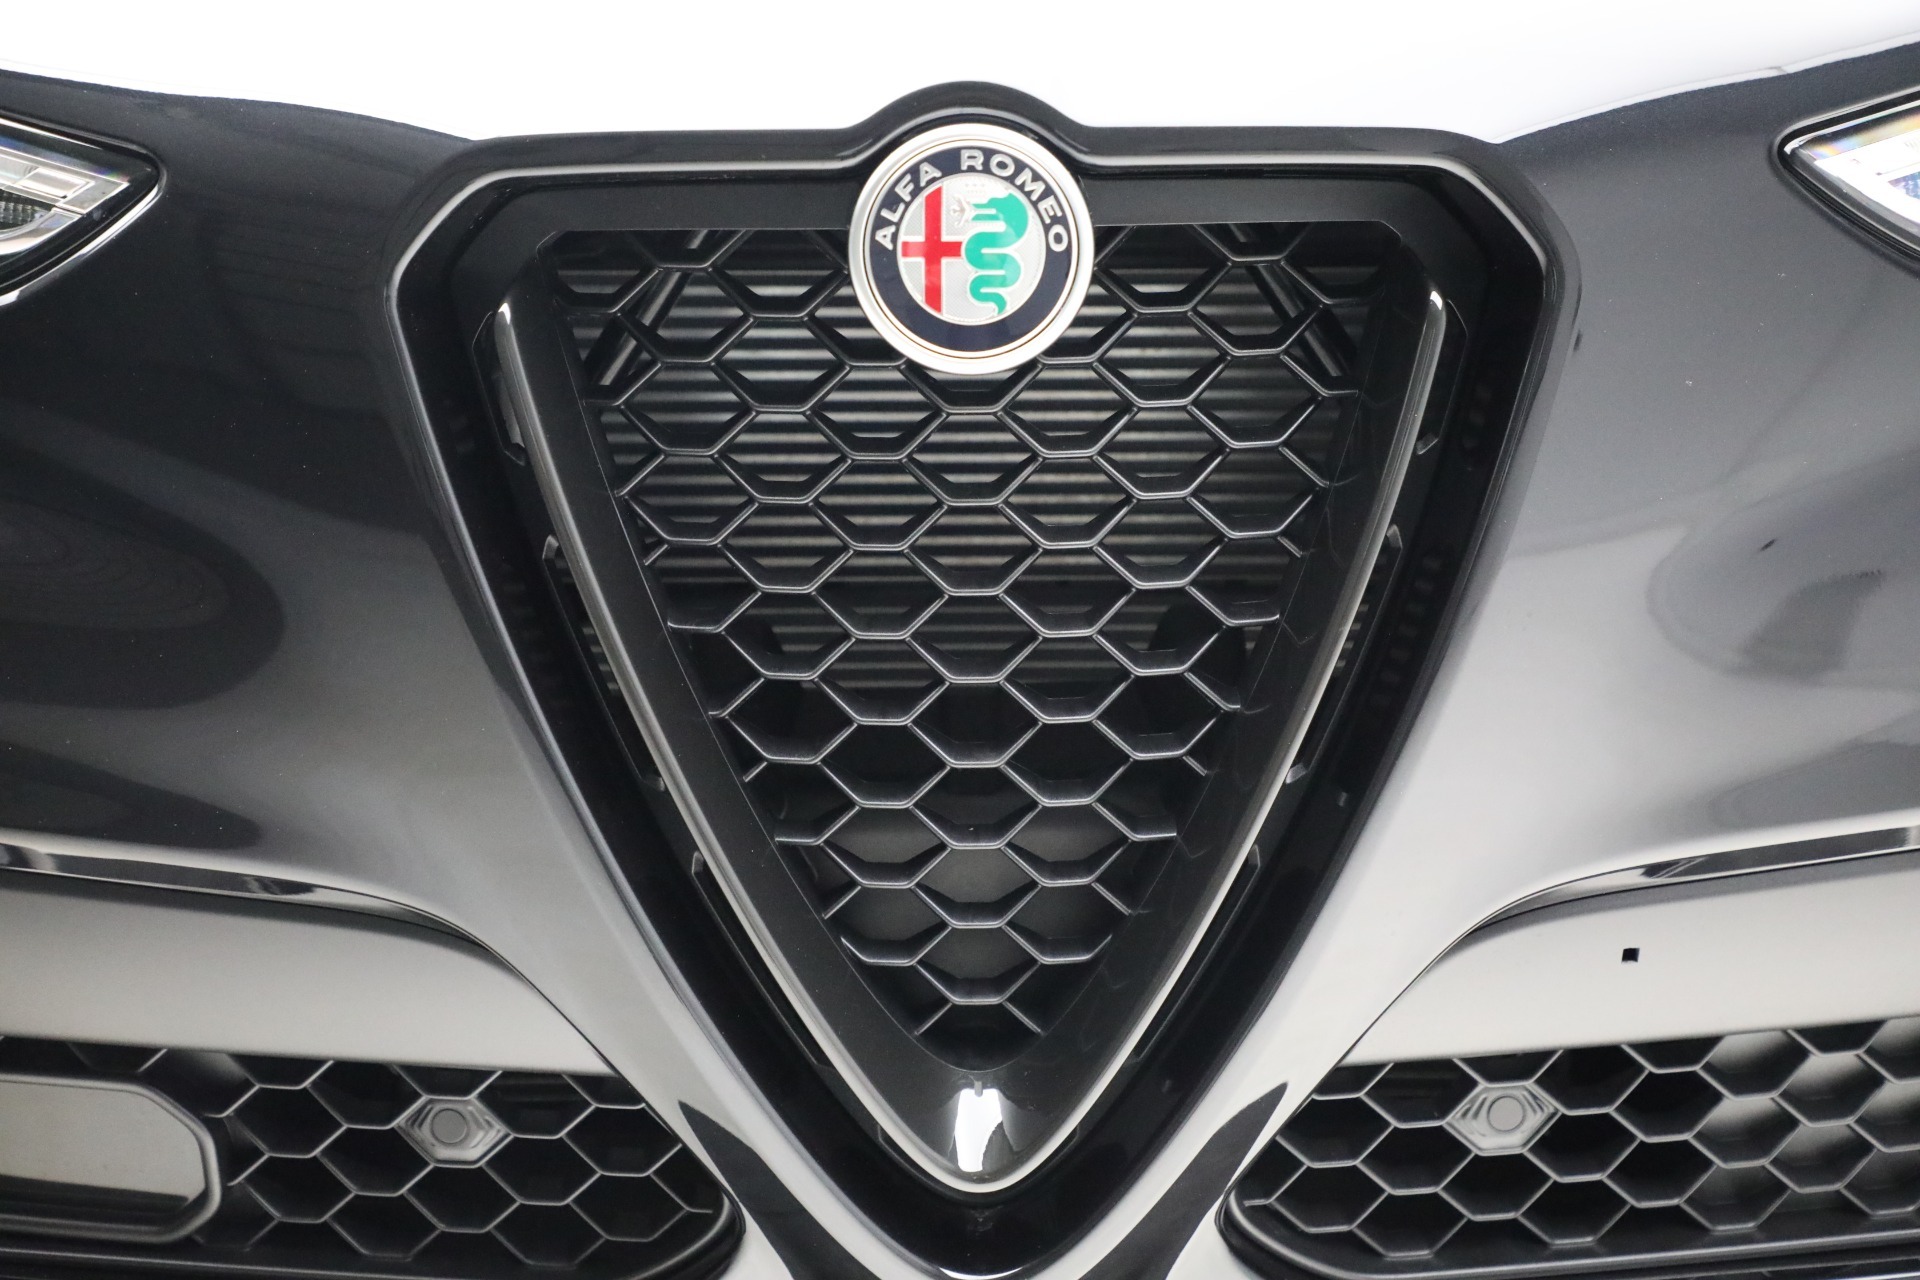 New 2022 Alfa Romeo Stelvio Veloce